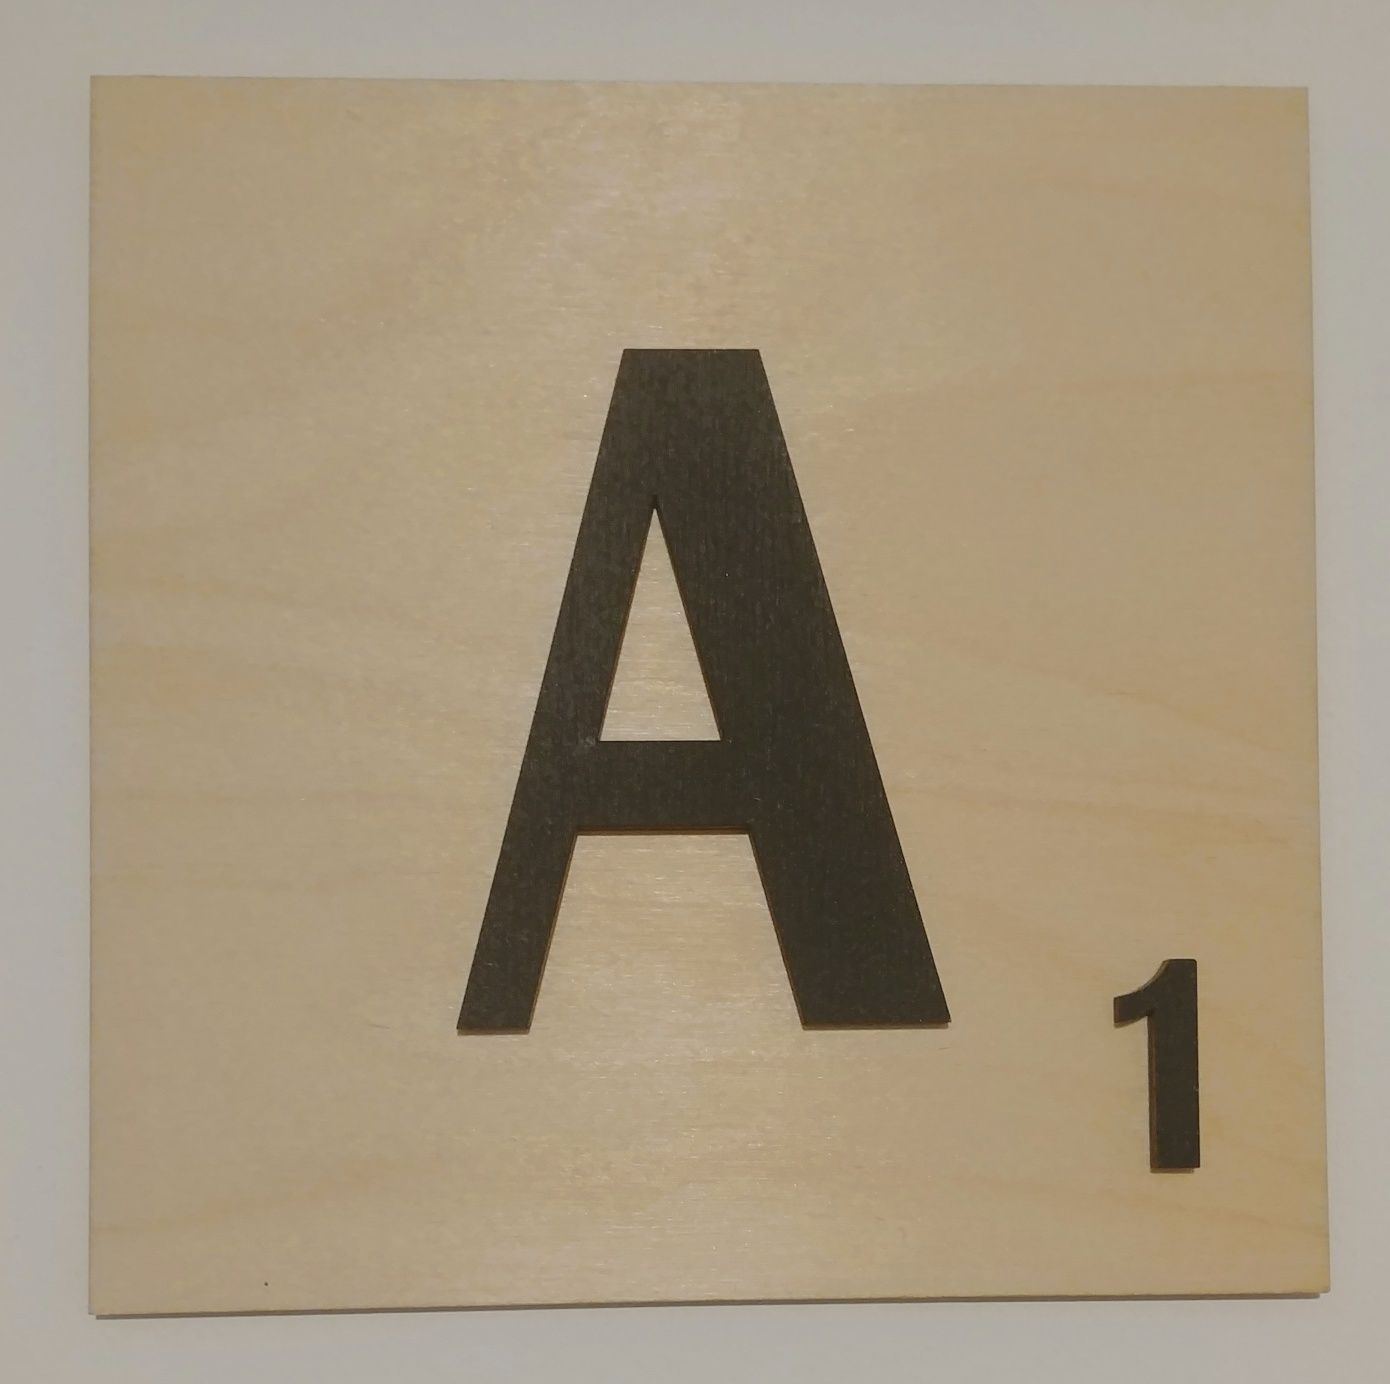 Scrabble litery drewniane 10 elementów